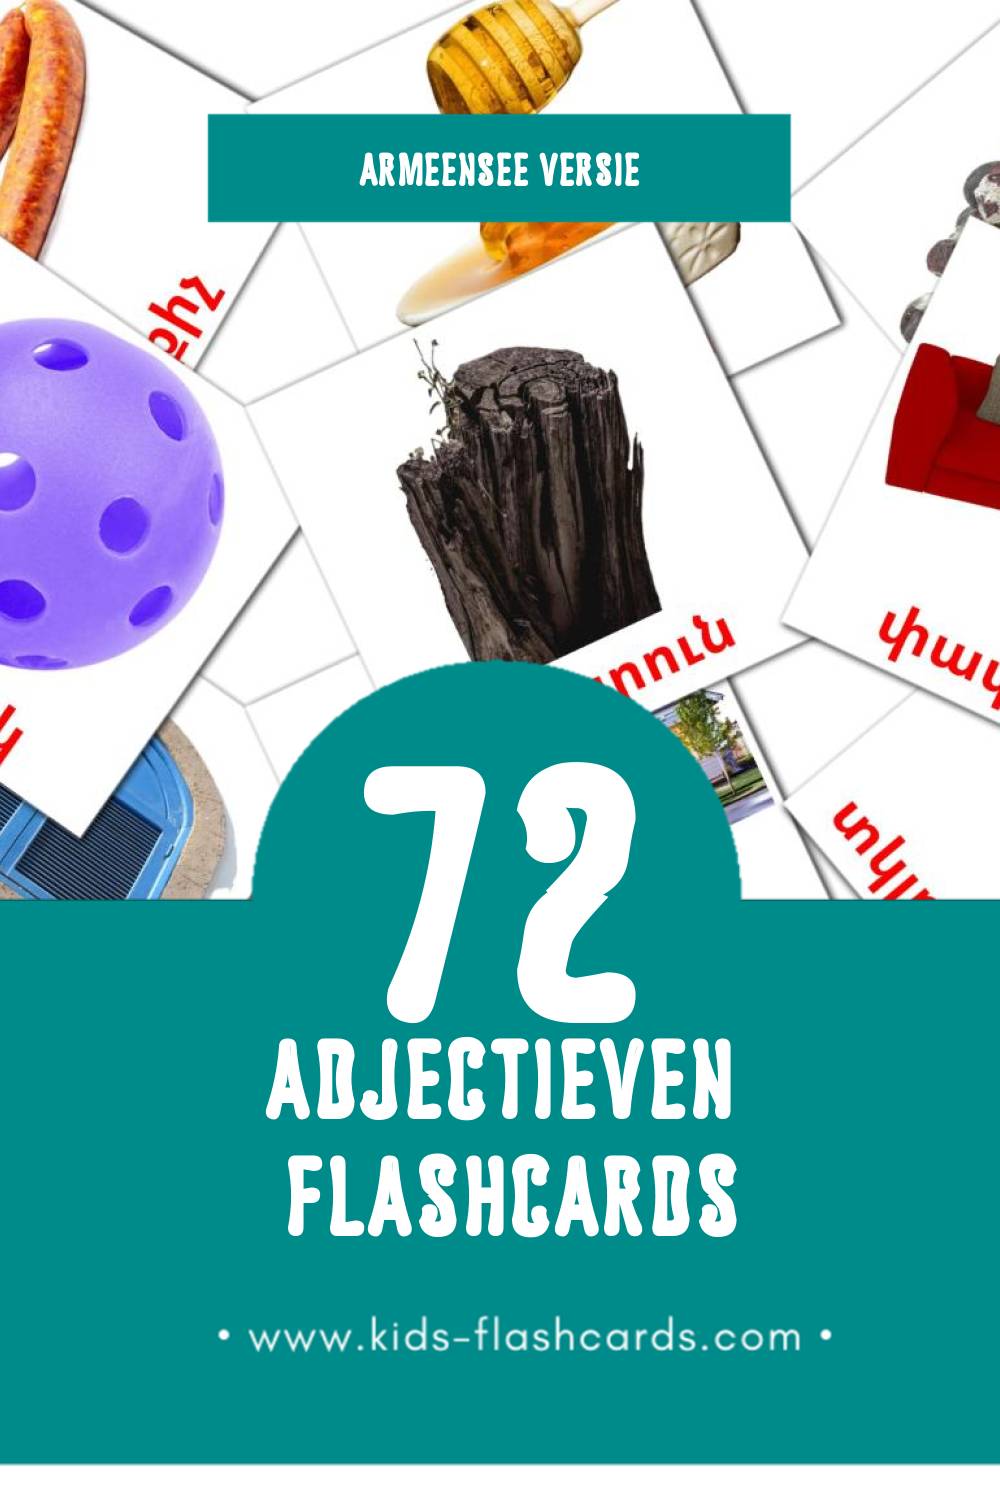 Visuele Ածական (անուն) Flashcards voor Kleuters (72 kaarten in het Armeense)